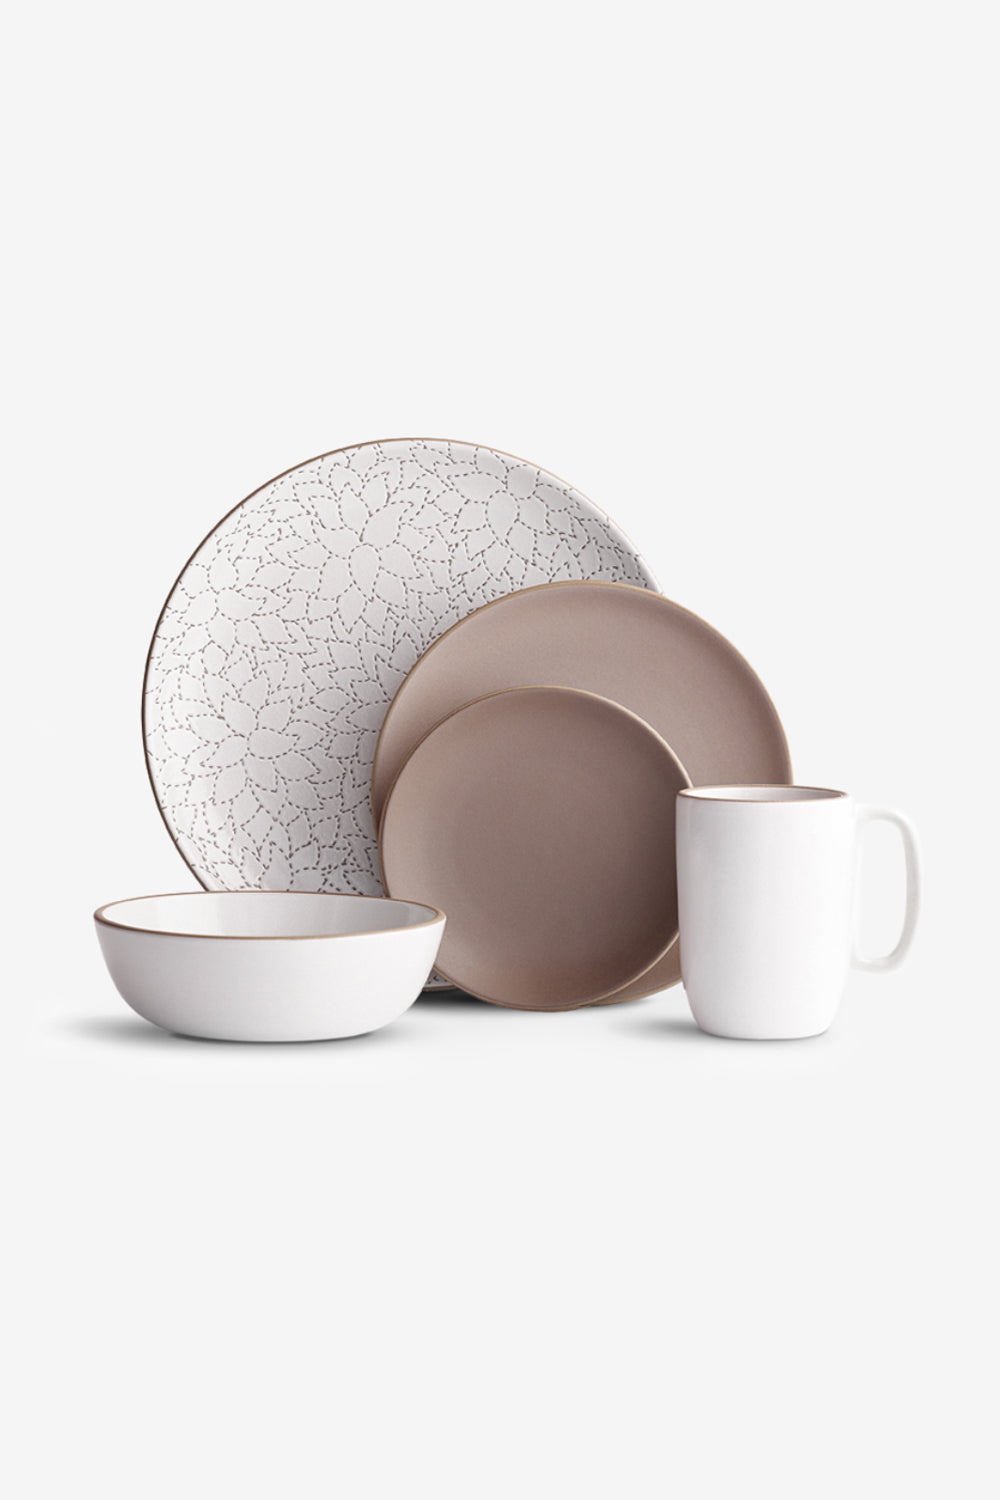 Alabama Chanin Camellia Cocoa Dinnerware Set Hand-Etched Dinnerware Set by Heath Ceramics